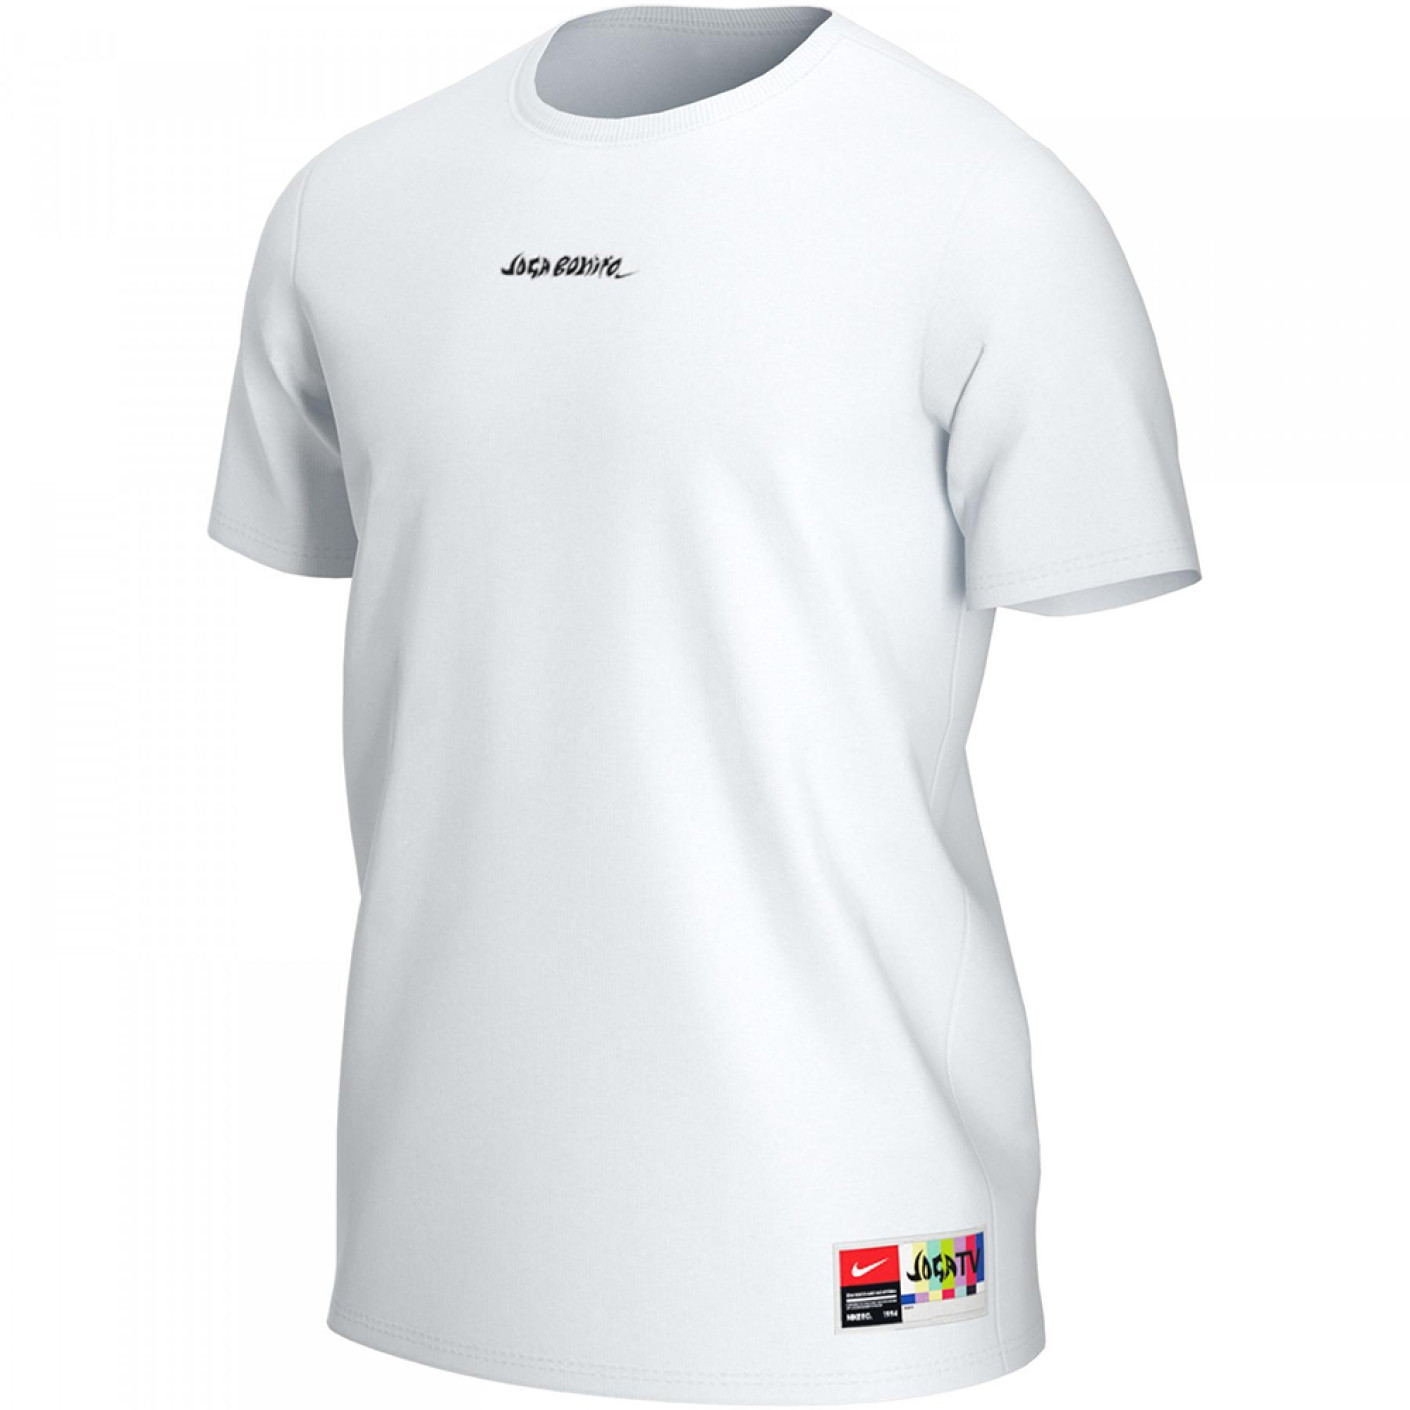 Nike F.C. Joga Bonito T-Shirt White